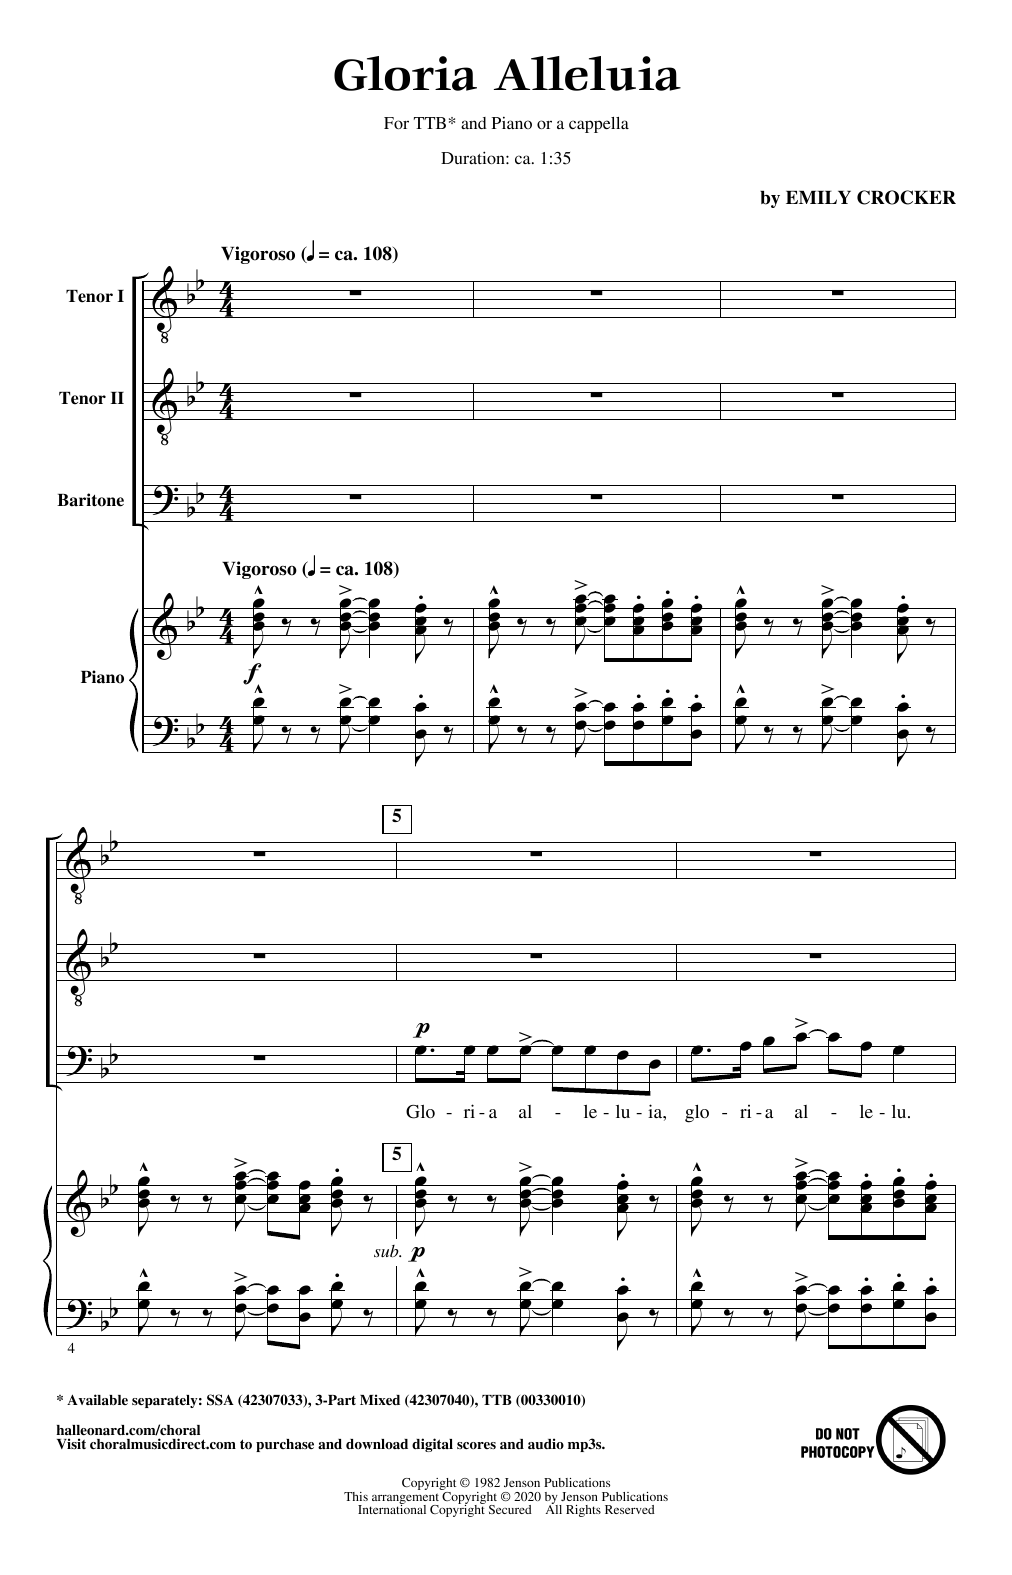 Emily Crocker Gloria Alleluia Sheet Music Notes & Chords for TTBB Choir - Download or Print PDF